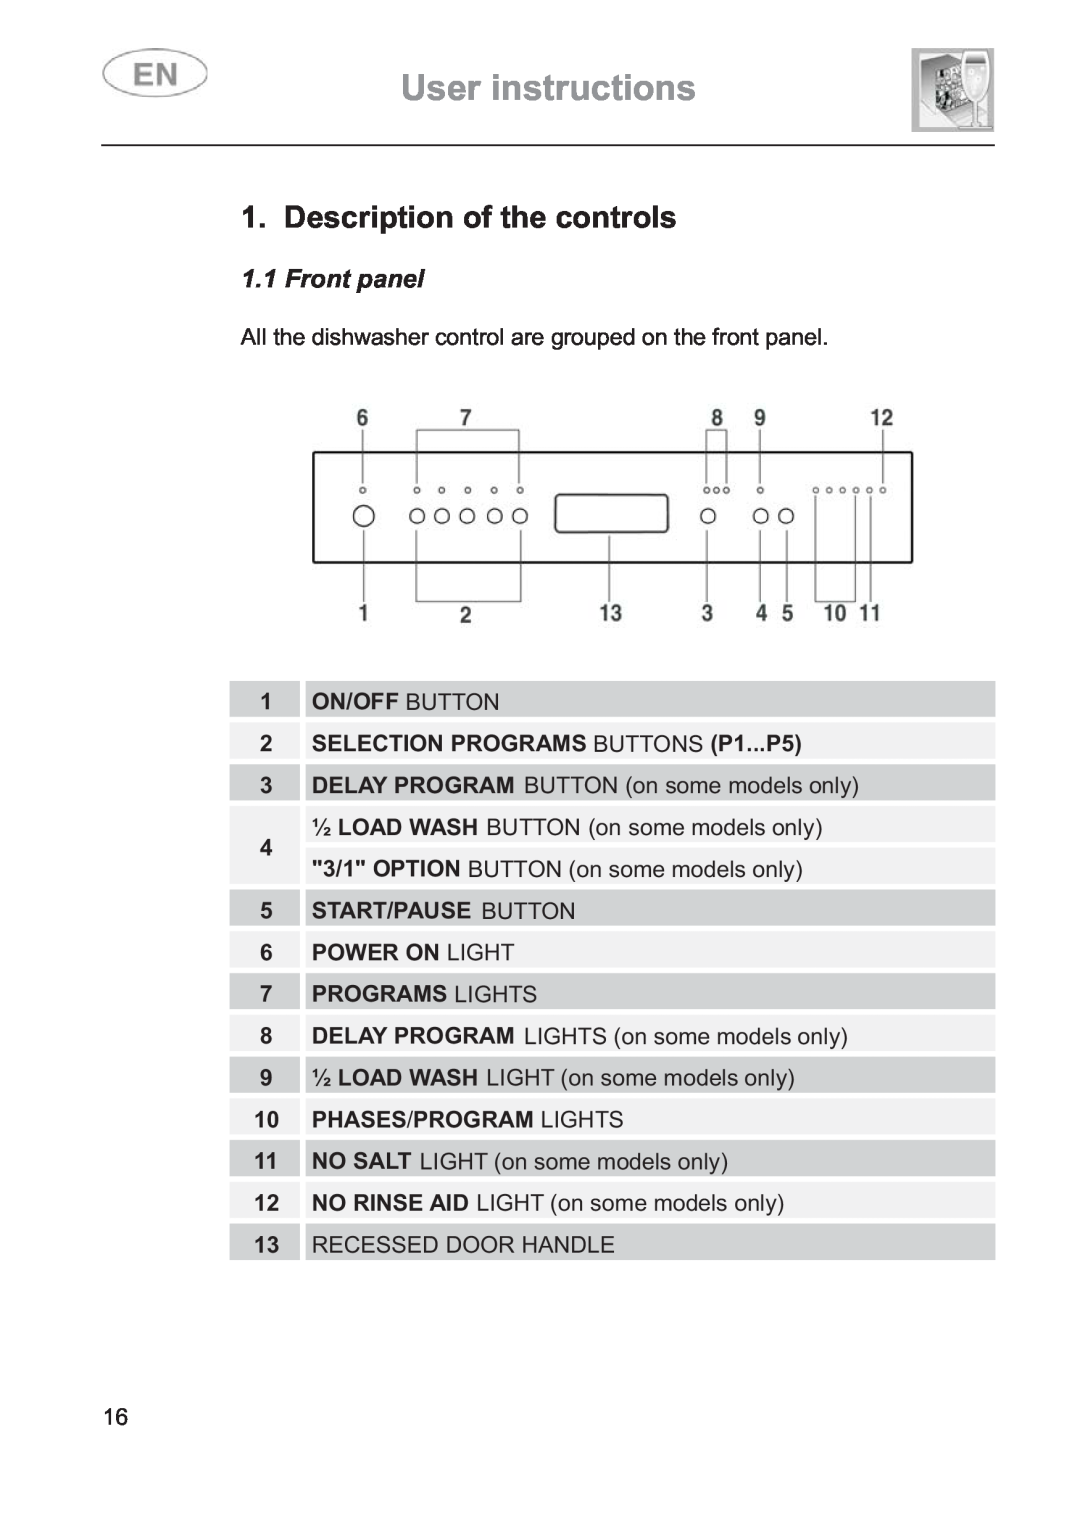 Smeg DD612S7 manual User instructions, Description of the controls, Front panel 